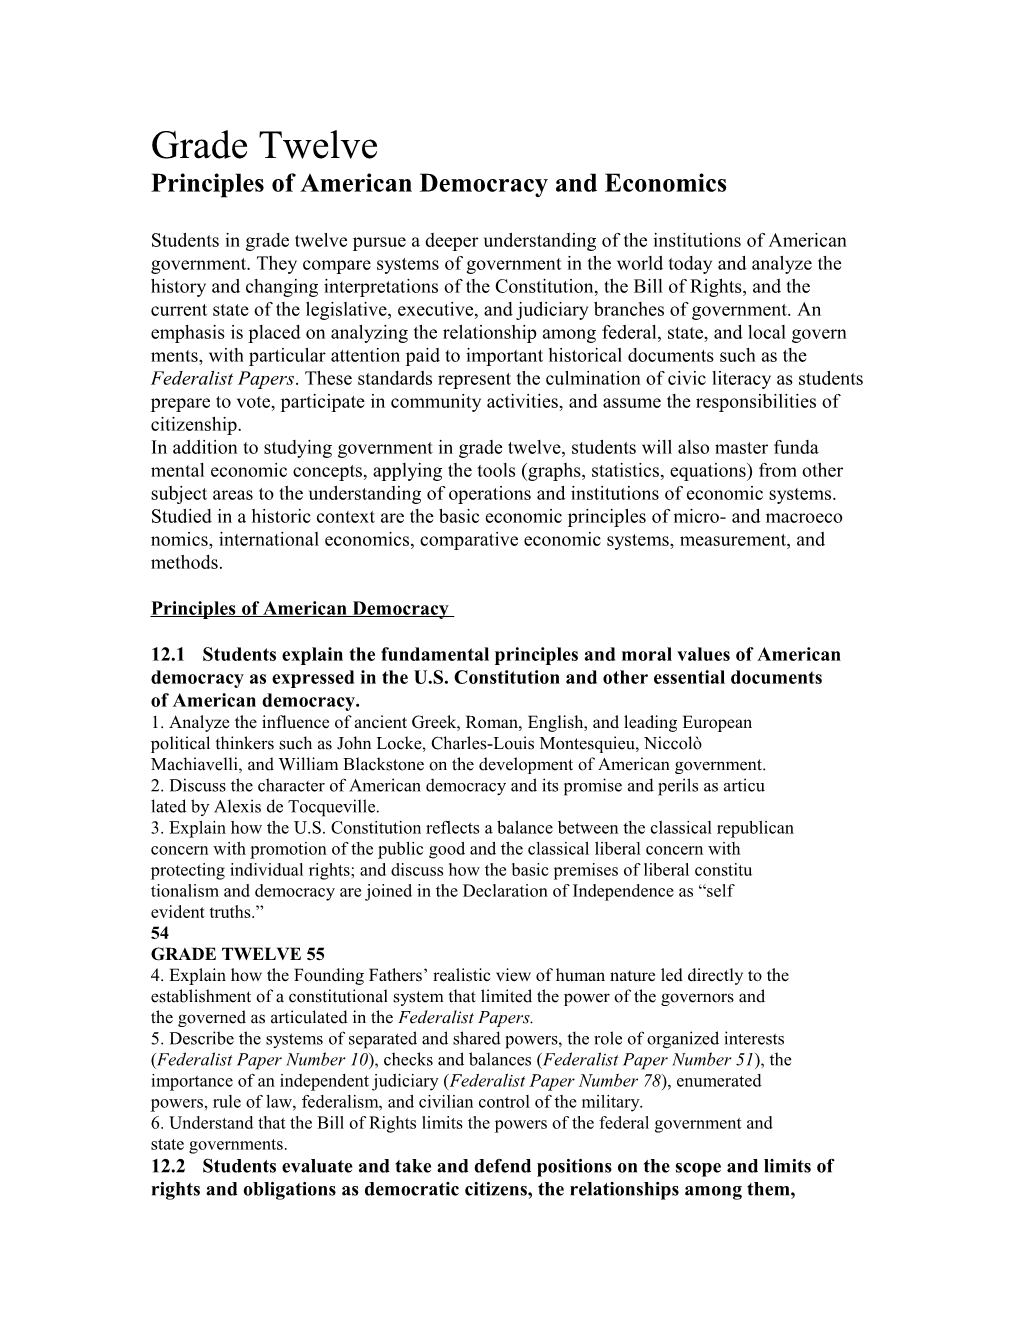 Principles of American Democracy and Economics